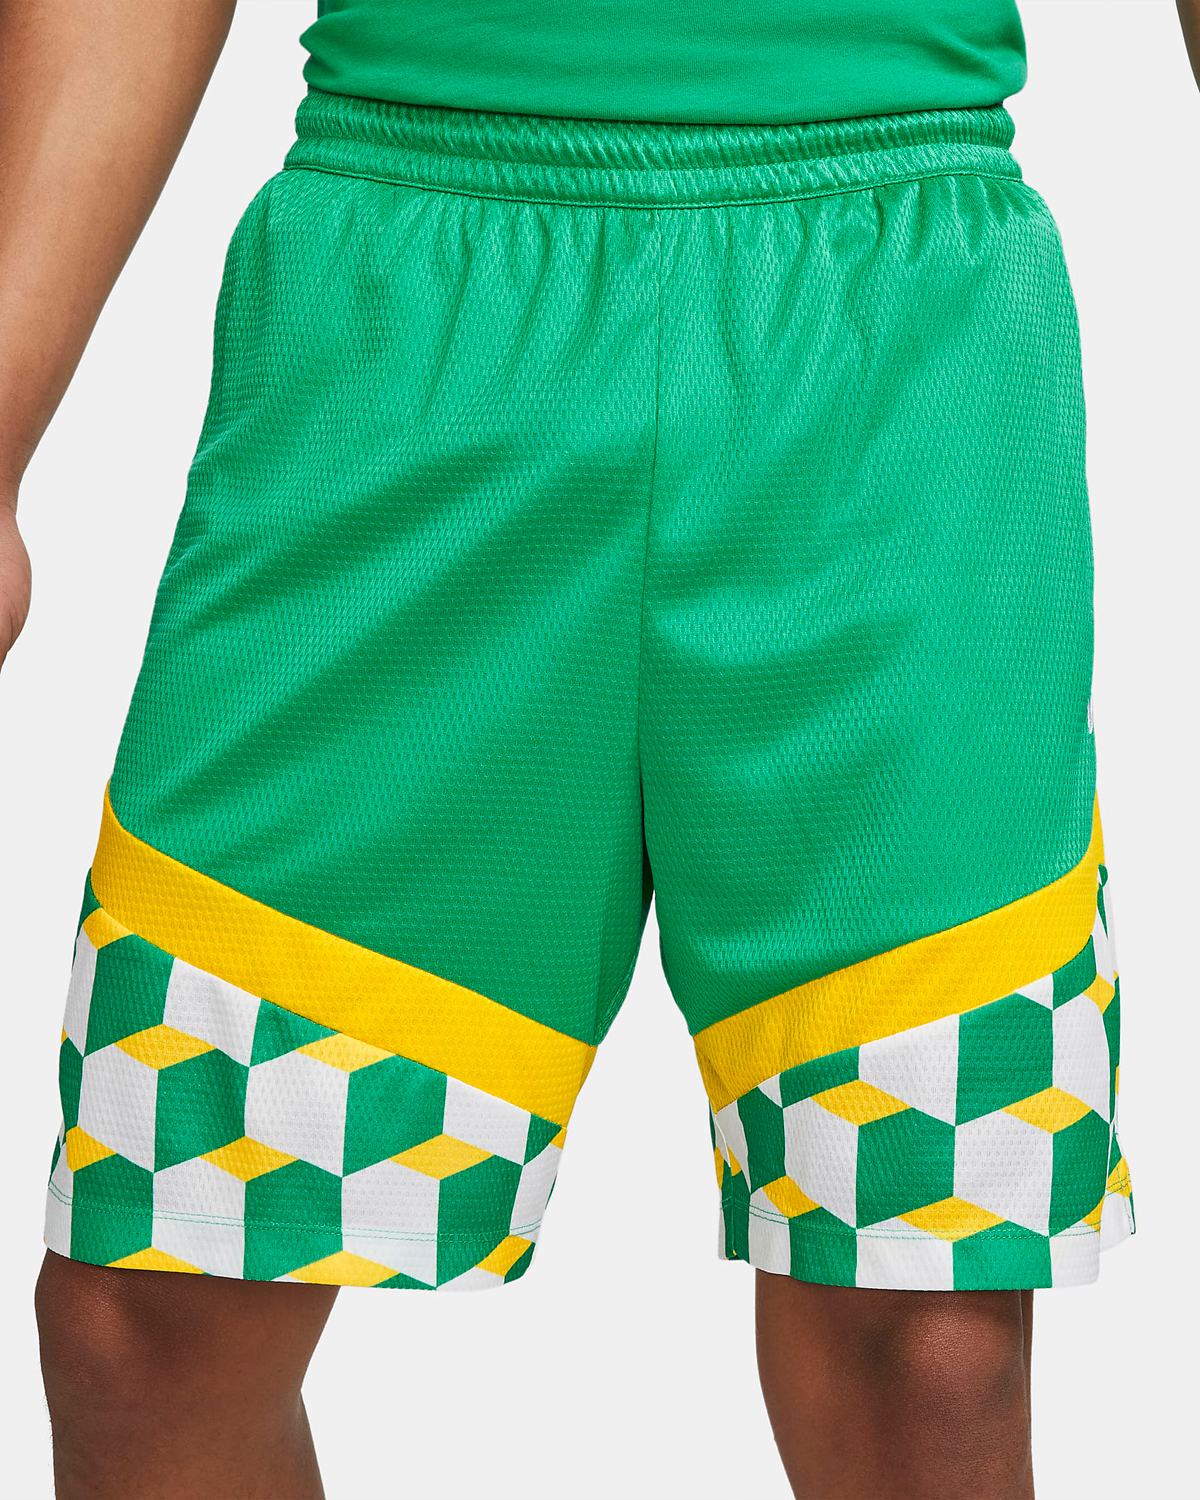 Nike-Stadium-Green-Basketball-Shorts-1